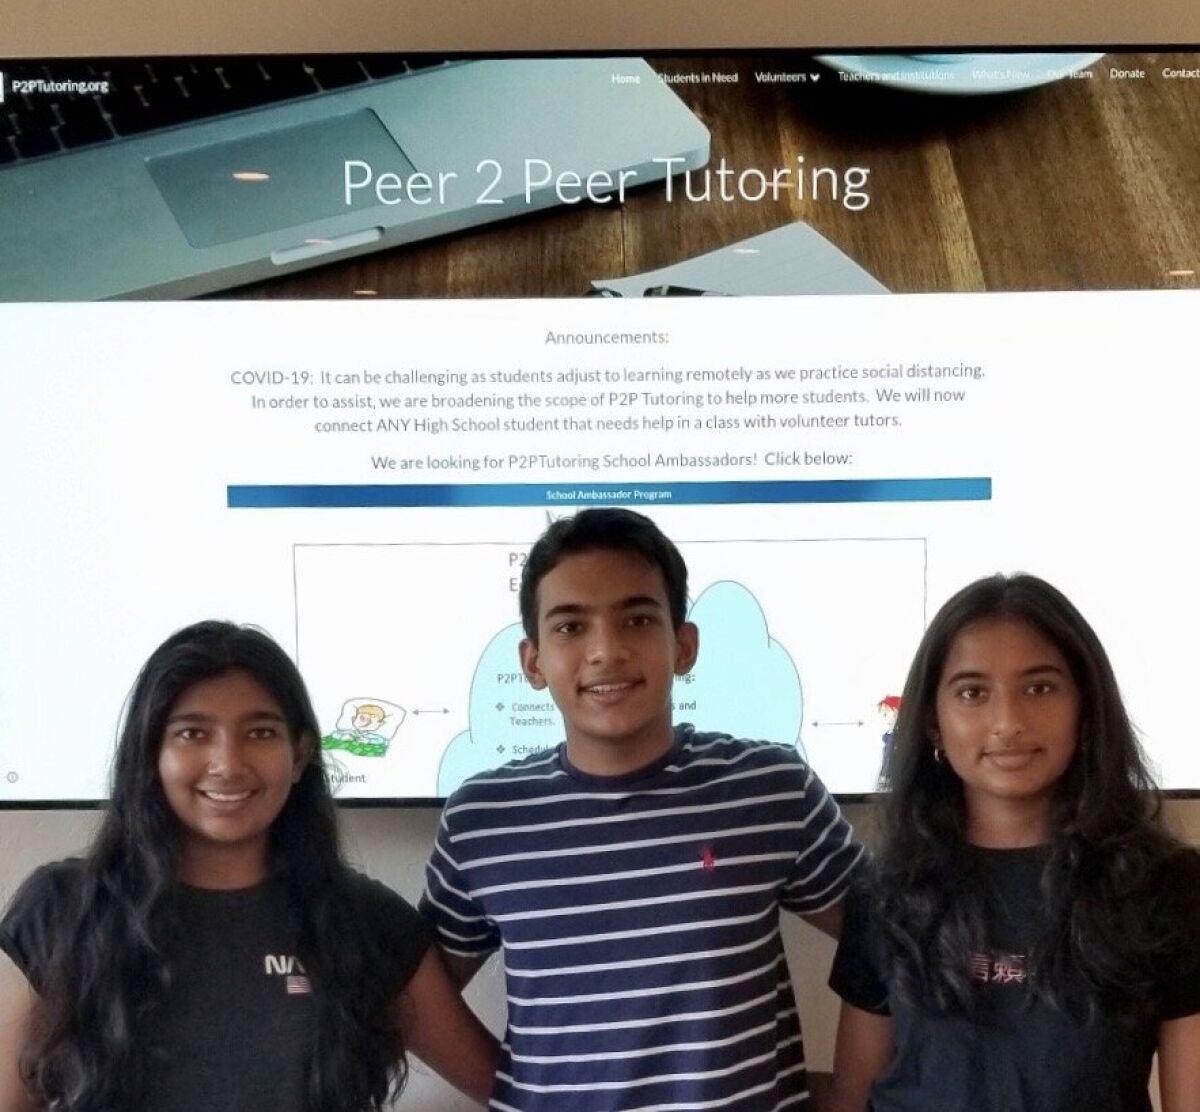 Siblings Sonia, Nikhil and Esha Mathur are the founders of Peer 2 Peer Tutoring